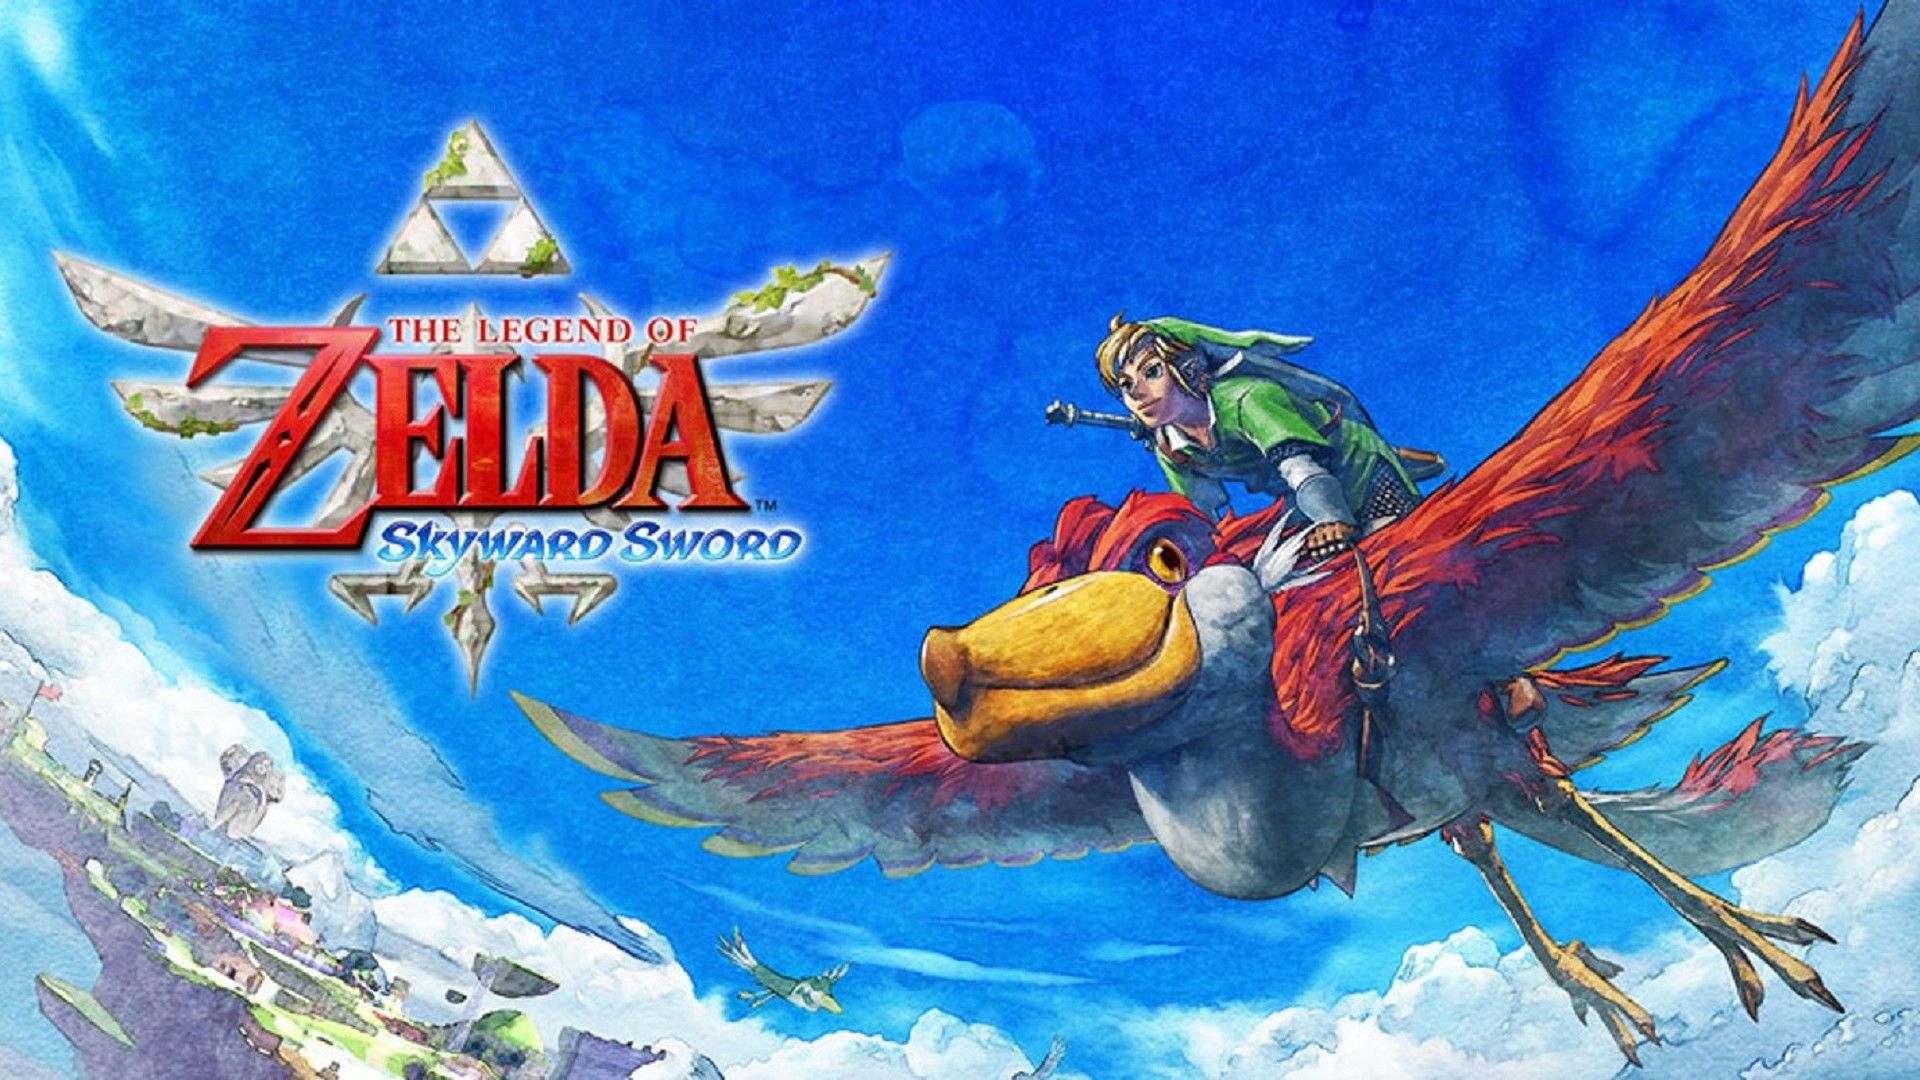 The Legend of Zelda: Skyward Sword HD Announced for Nintendo Switch